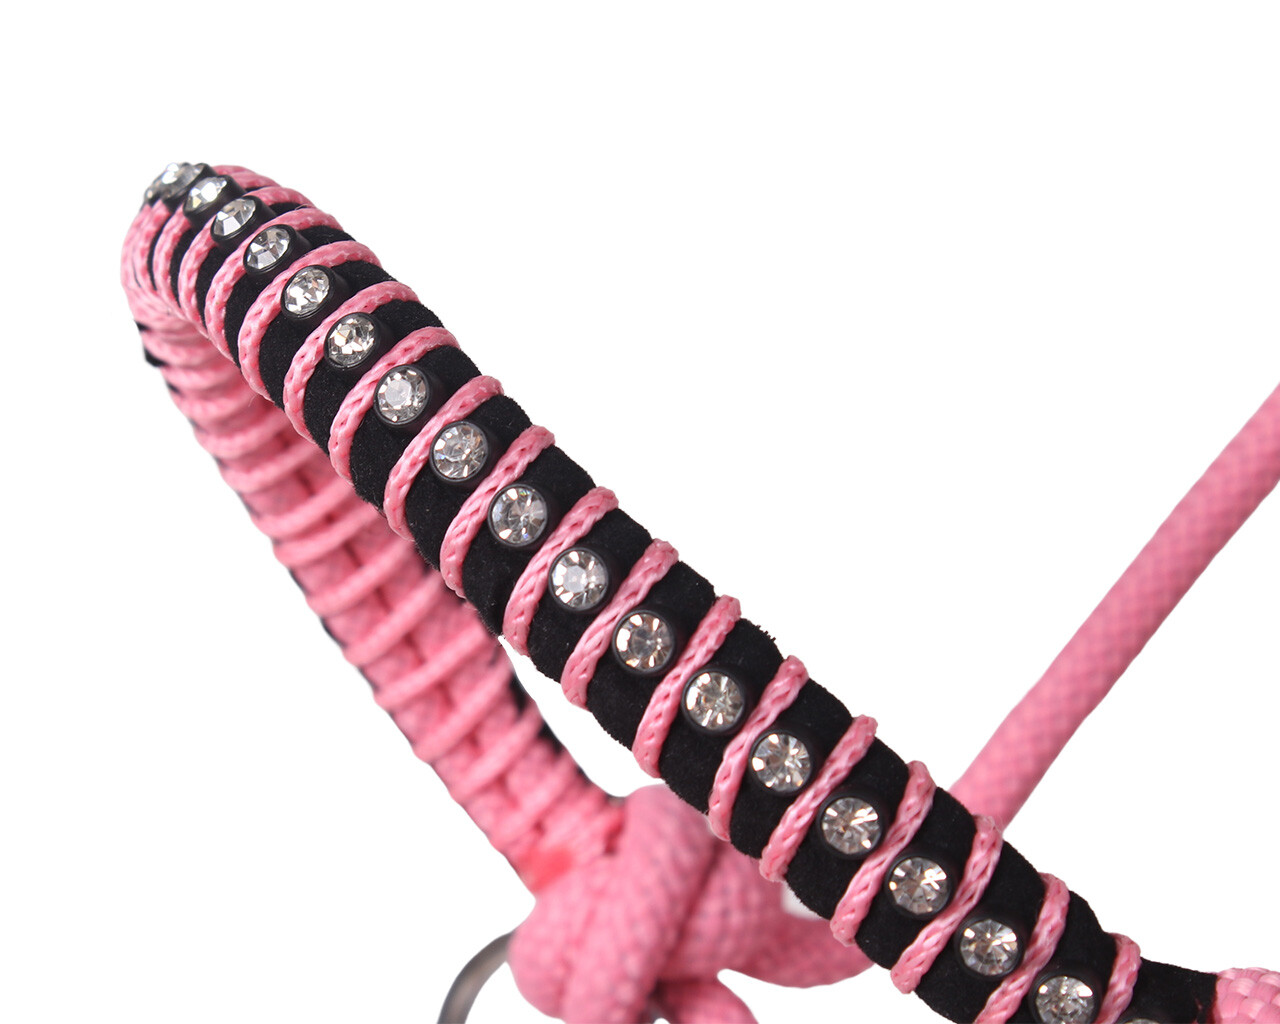 Knotenhalfter LIBERTY kombi (mit Strickzügel & Halsring), flamingo pink